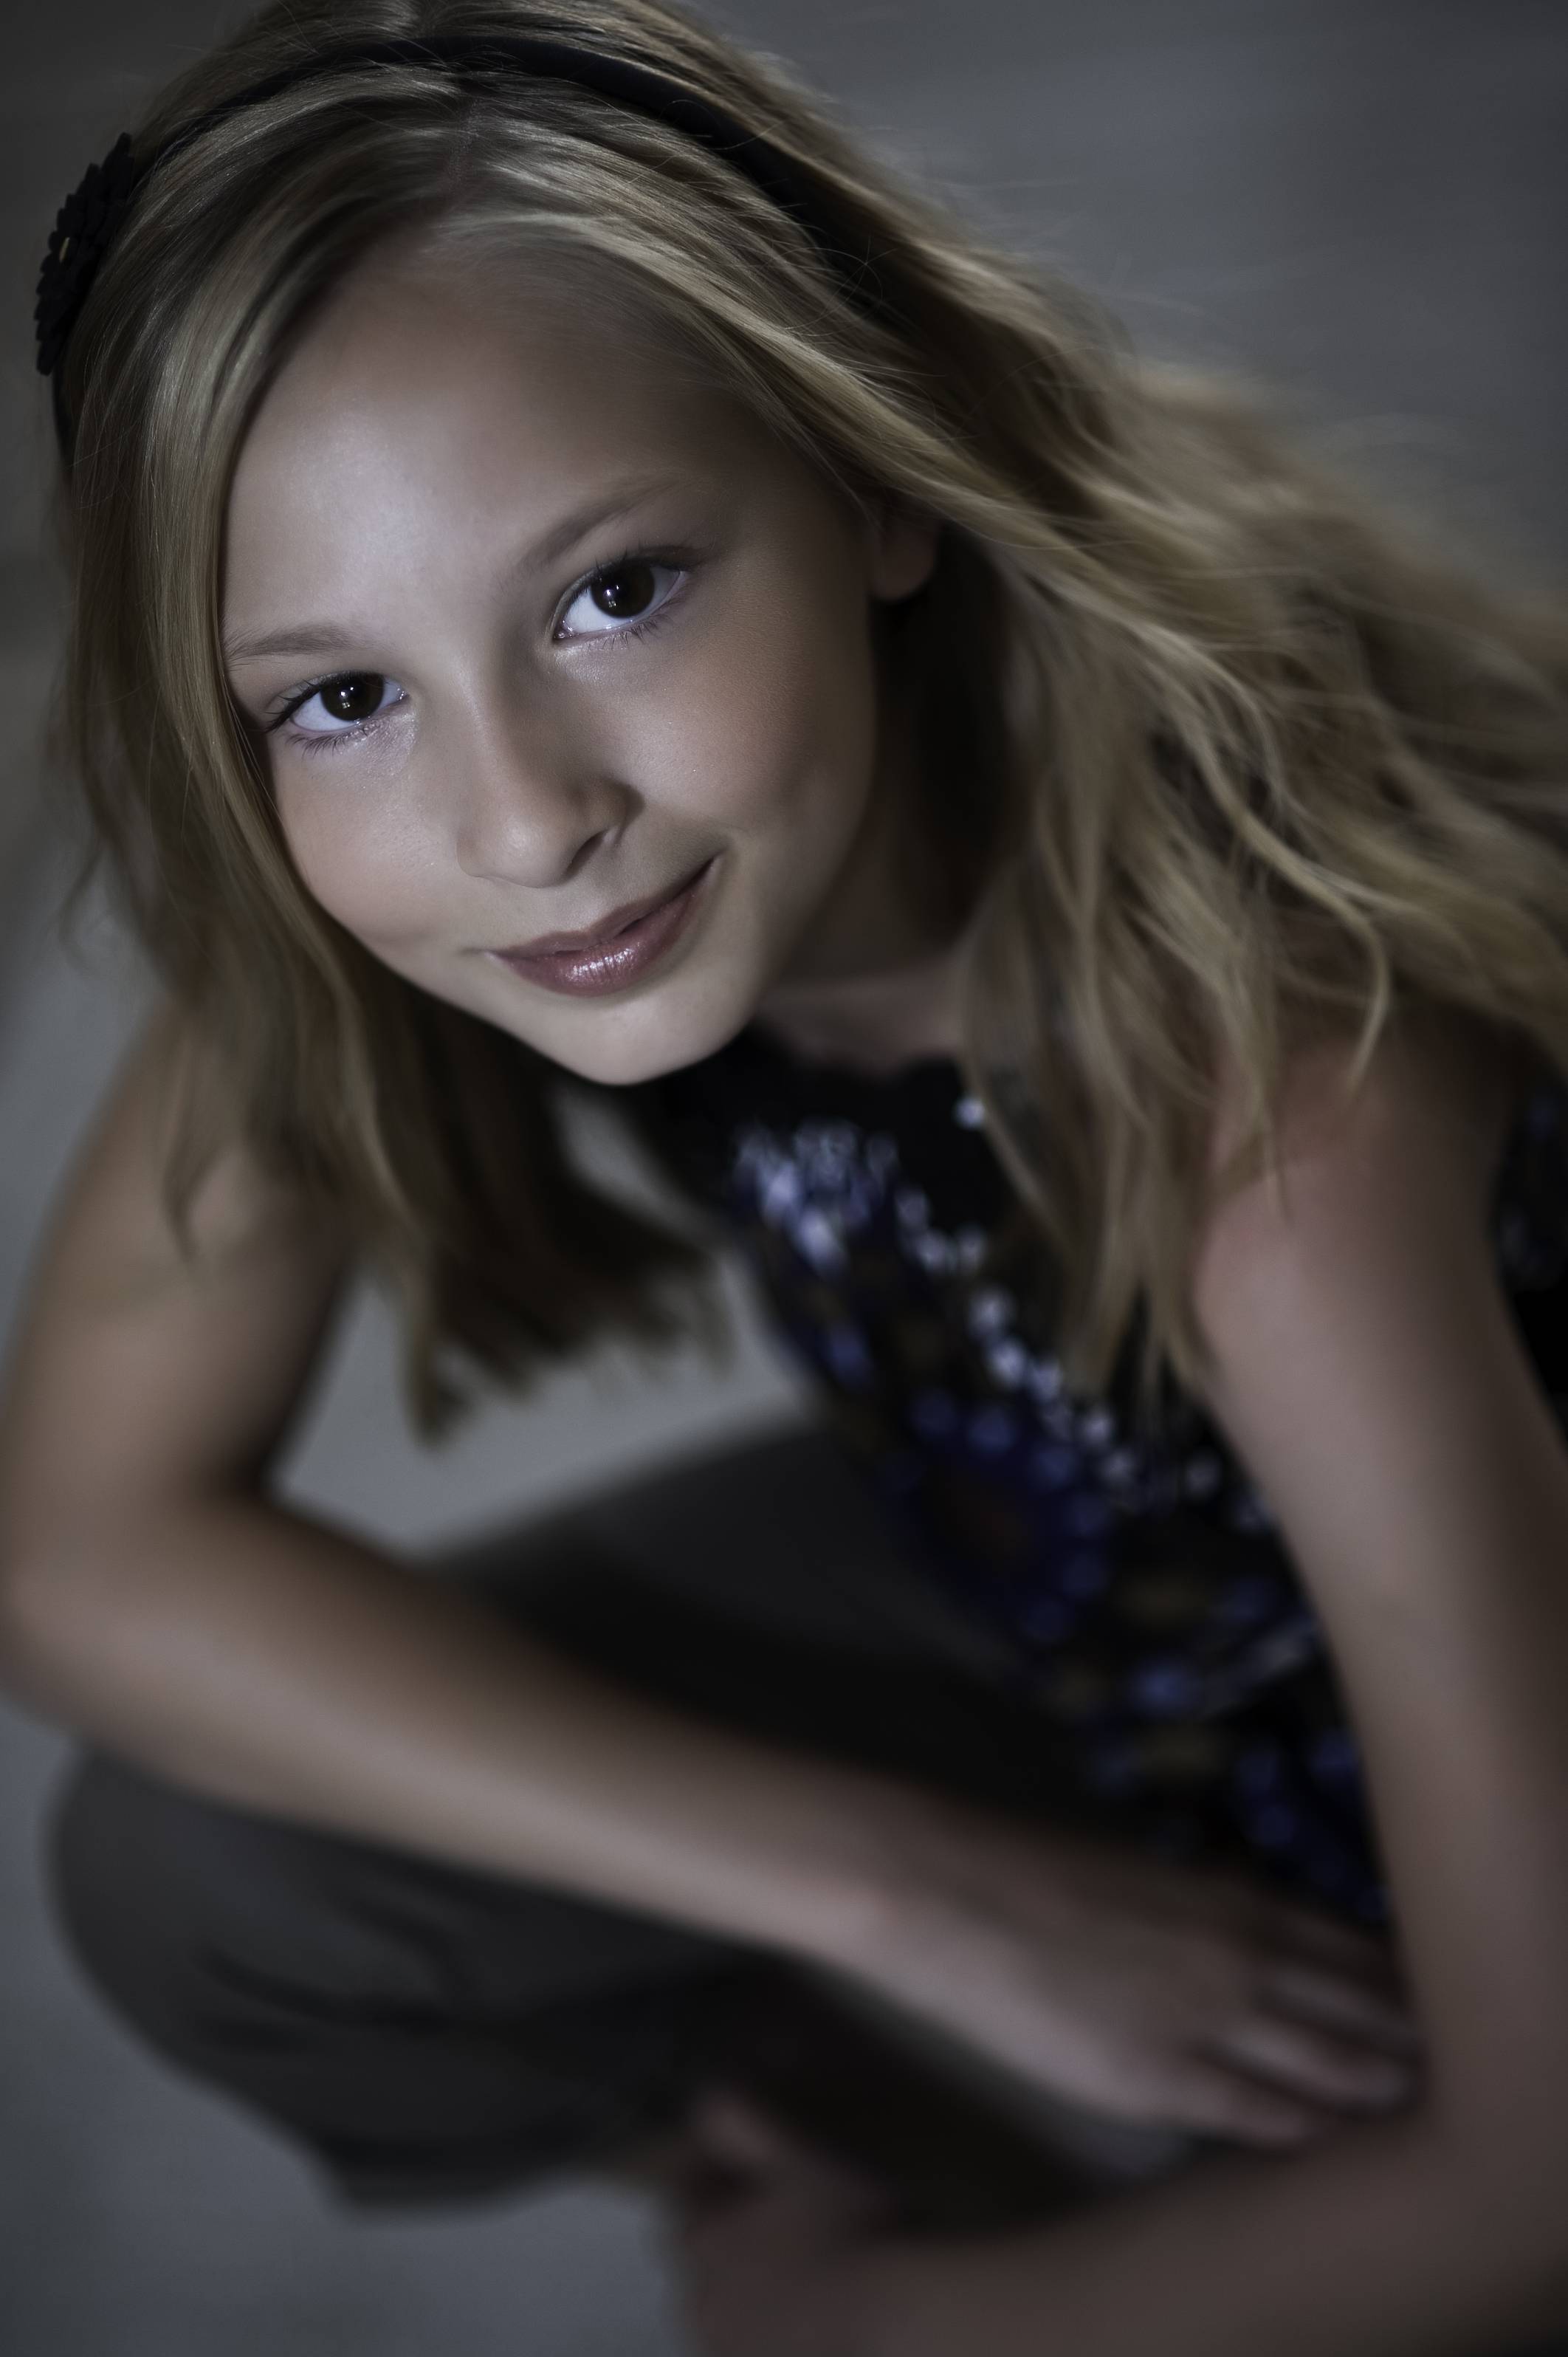 A child actress poses for a portrait - Peter Farrar